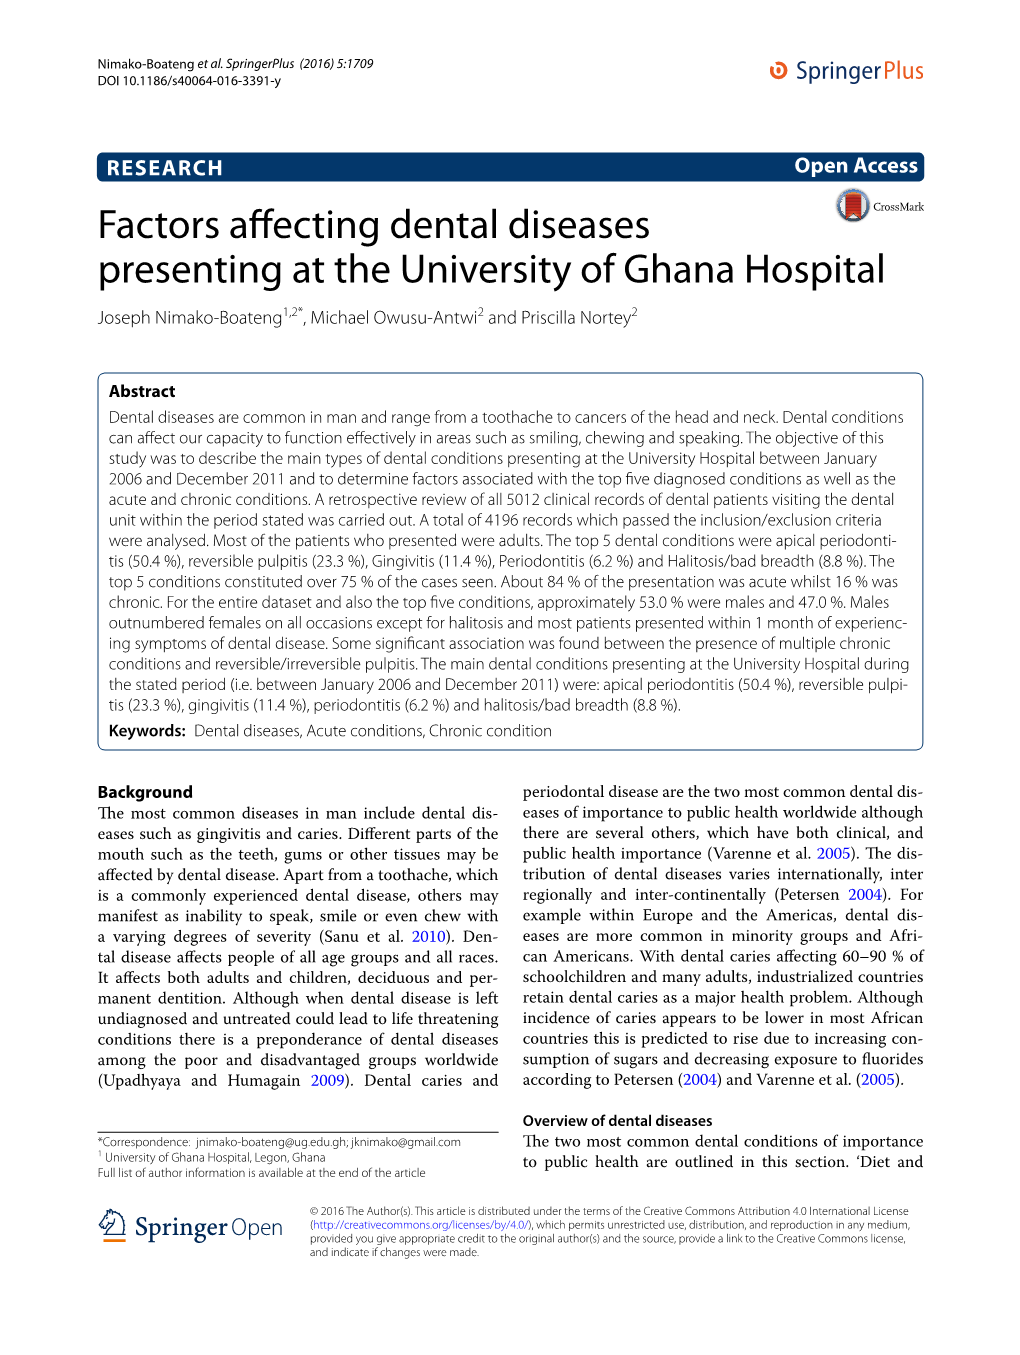 Factors Affecting Dental Diseases Presenting at the University of Ghana Hospital Joseph Nimako‑Boateng1,2*, Michael Owusu‑Antwi2 and Priscilla Nortey2